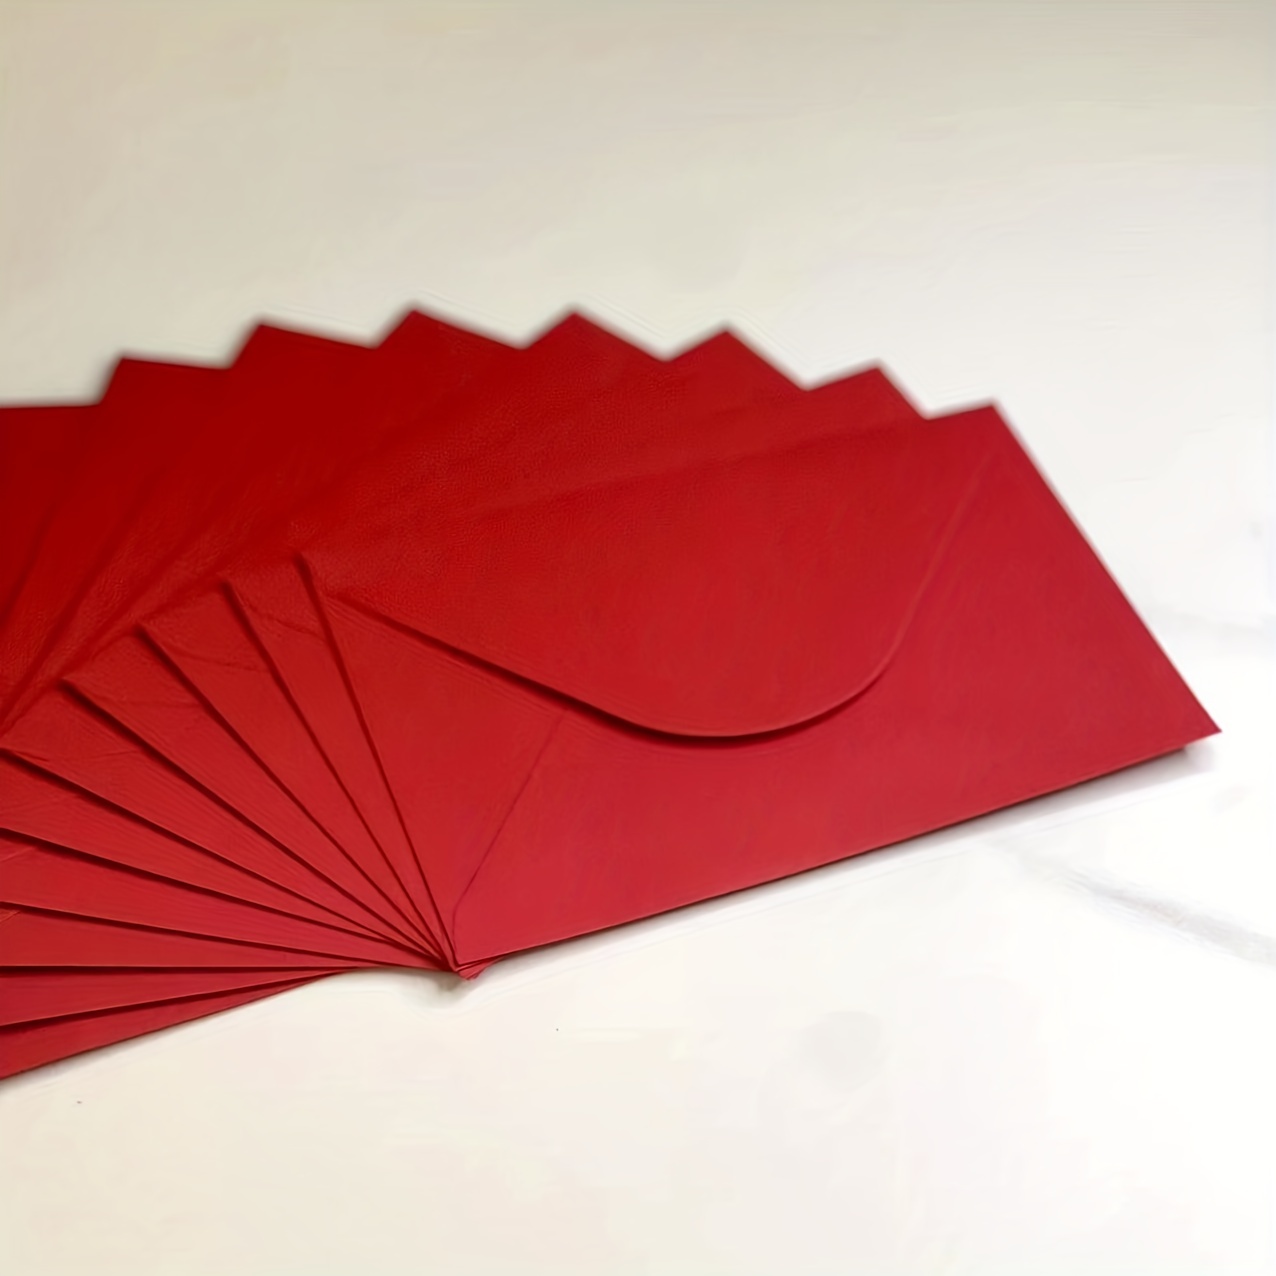 Red Envelope Clipart Transparent Background, Hand Painted Red Envelope 12  12 Red Envelope A Bunch Of Red Envelopes, Holiday Red Envelope, Cartoon Red  Envelope, Red Envelopes PNG Image For Free Download